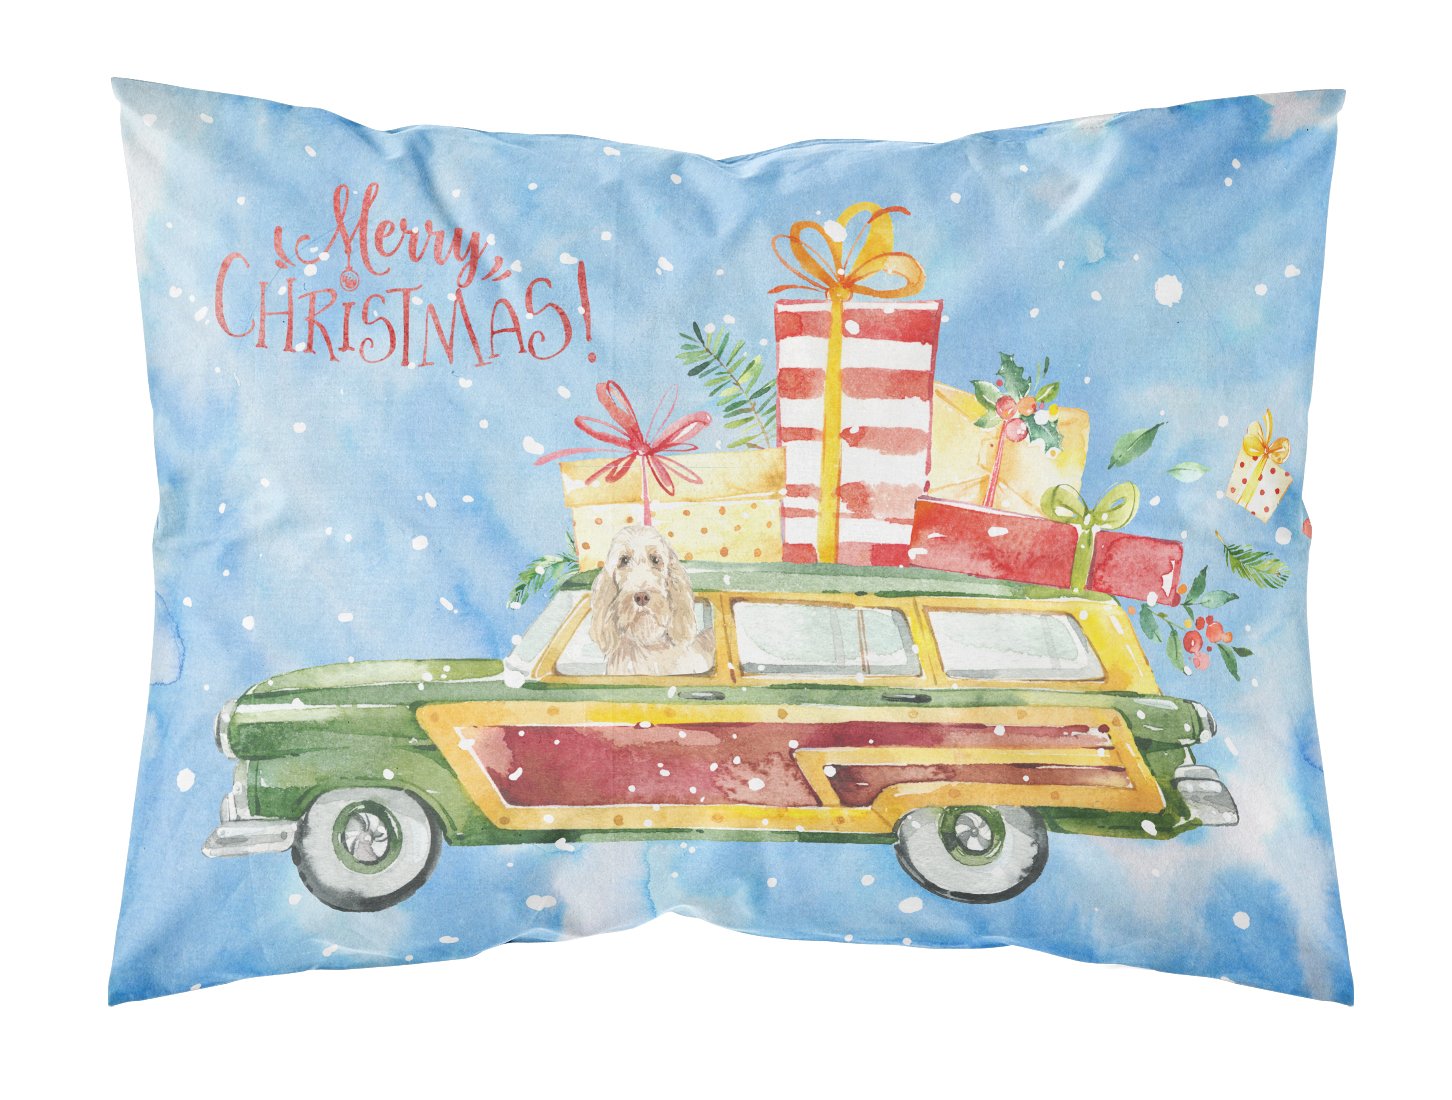 Merry Christmas Spinone Italiano Fabric Standard Pillowcase CK2425PILLOWCASE by Caroline's Treasures